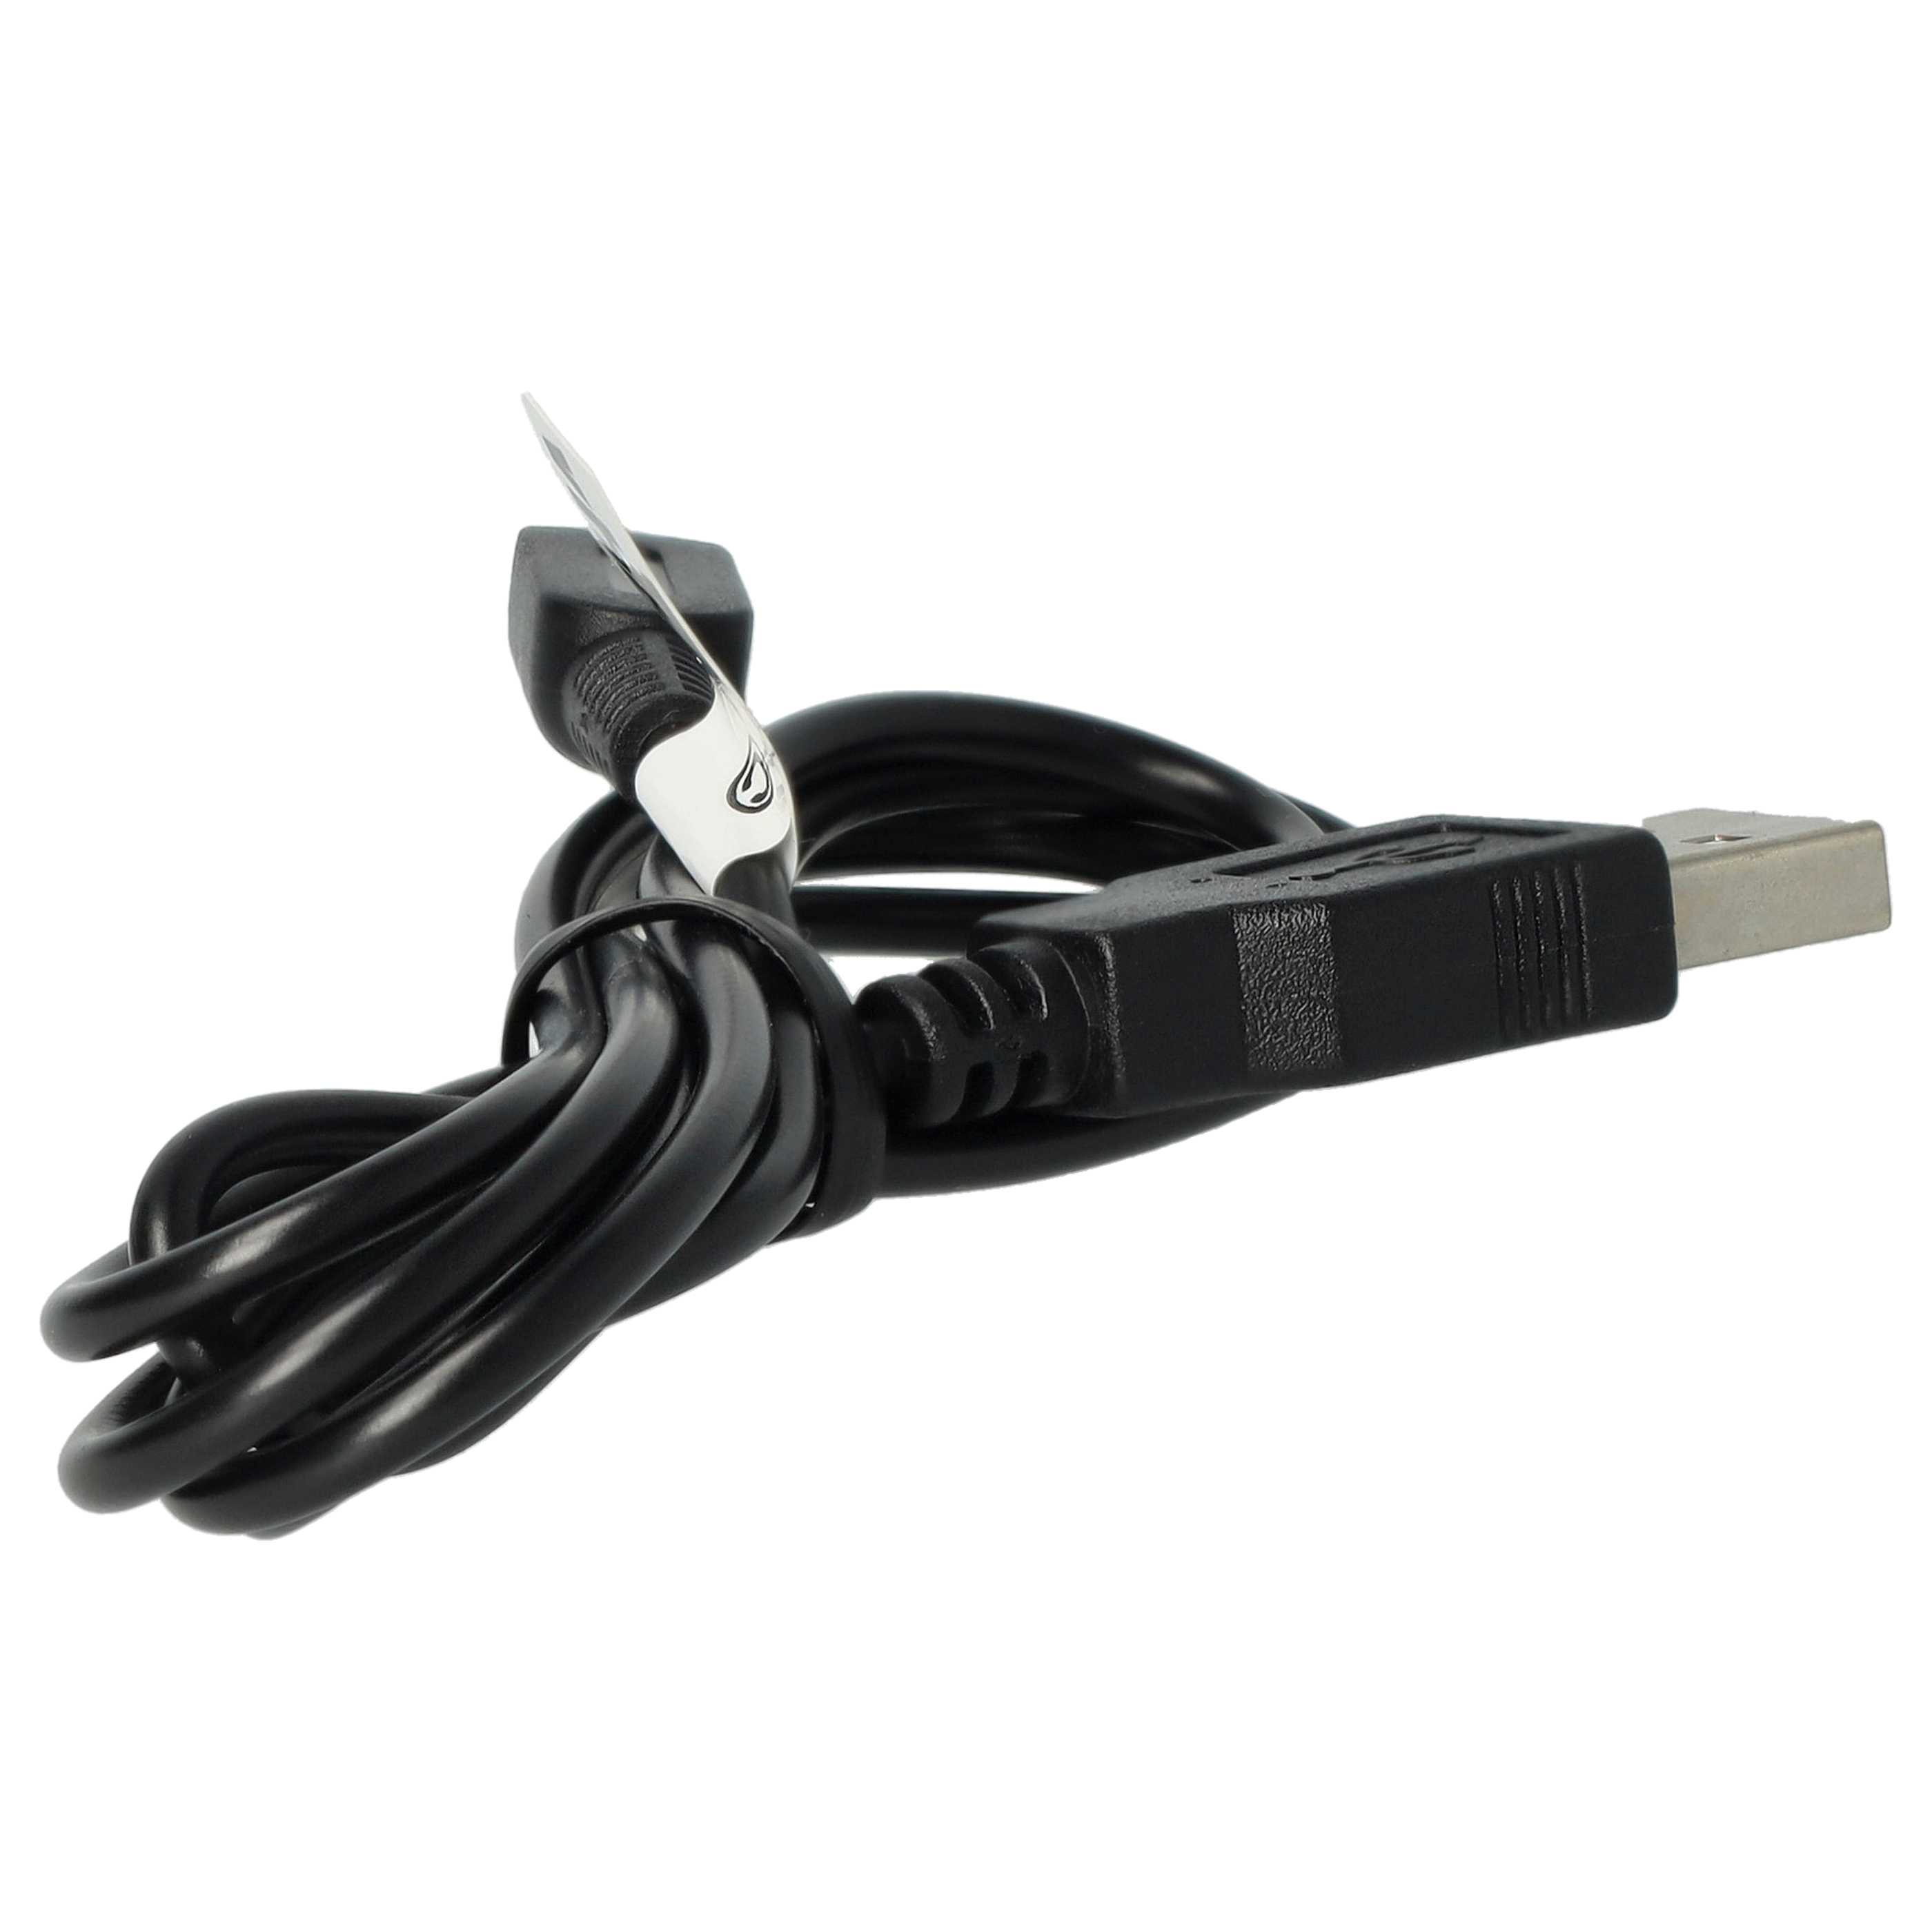 vhbw USB Kabel Spielekonsole - Verbindungskabel 1,2m Lang